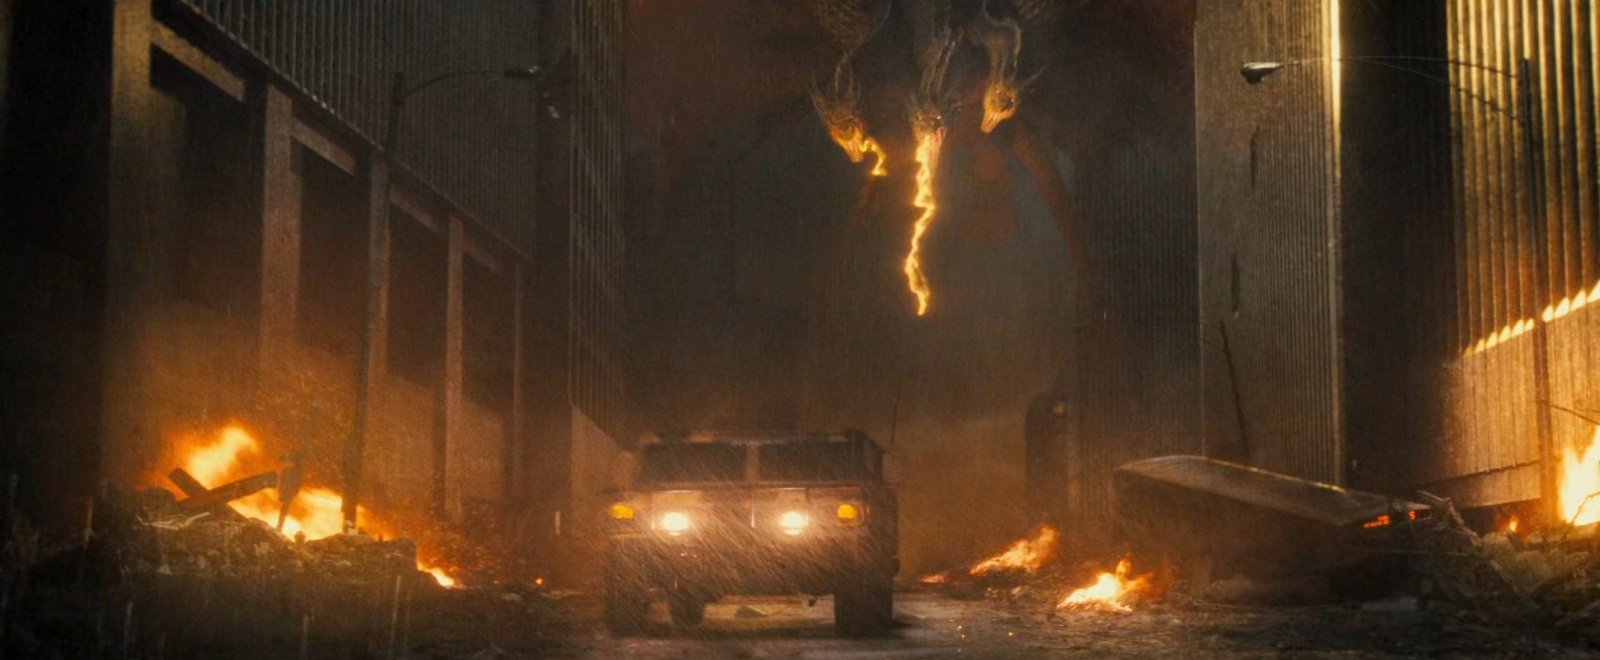 Godzilla 2 Final Trailer Screenshots - Godzilla: King of ...